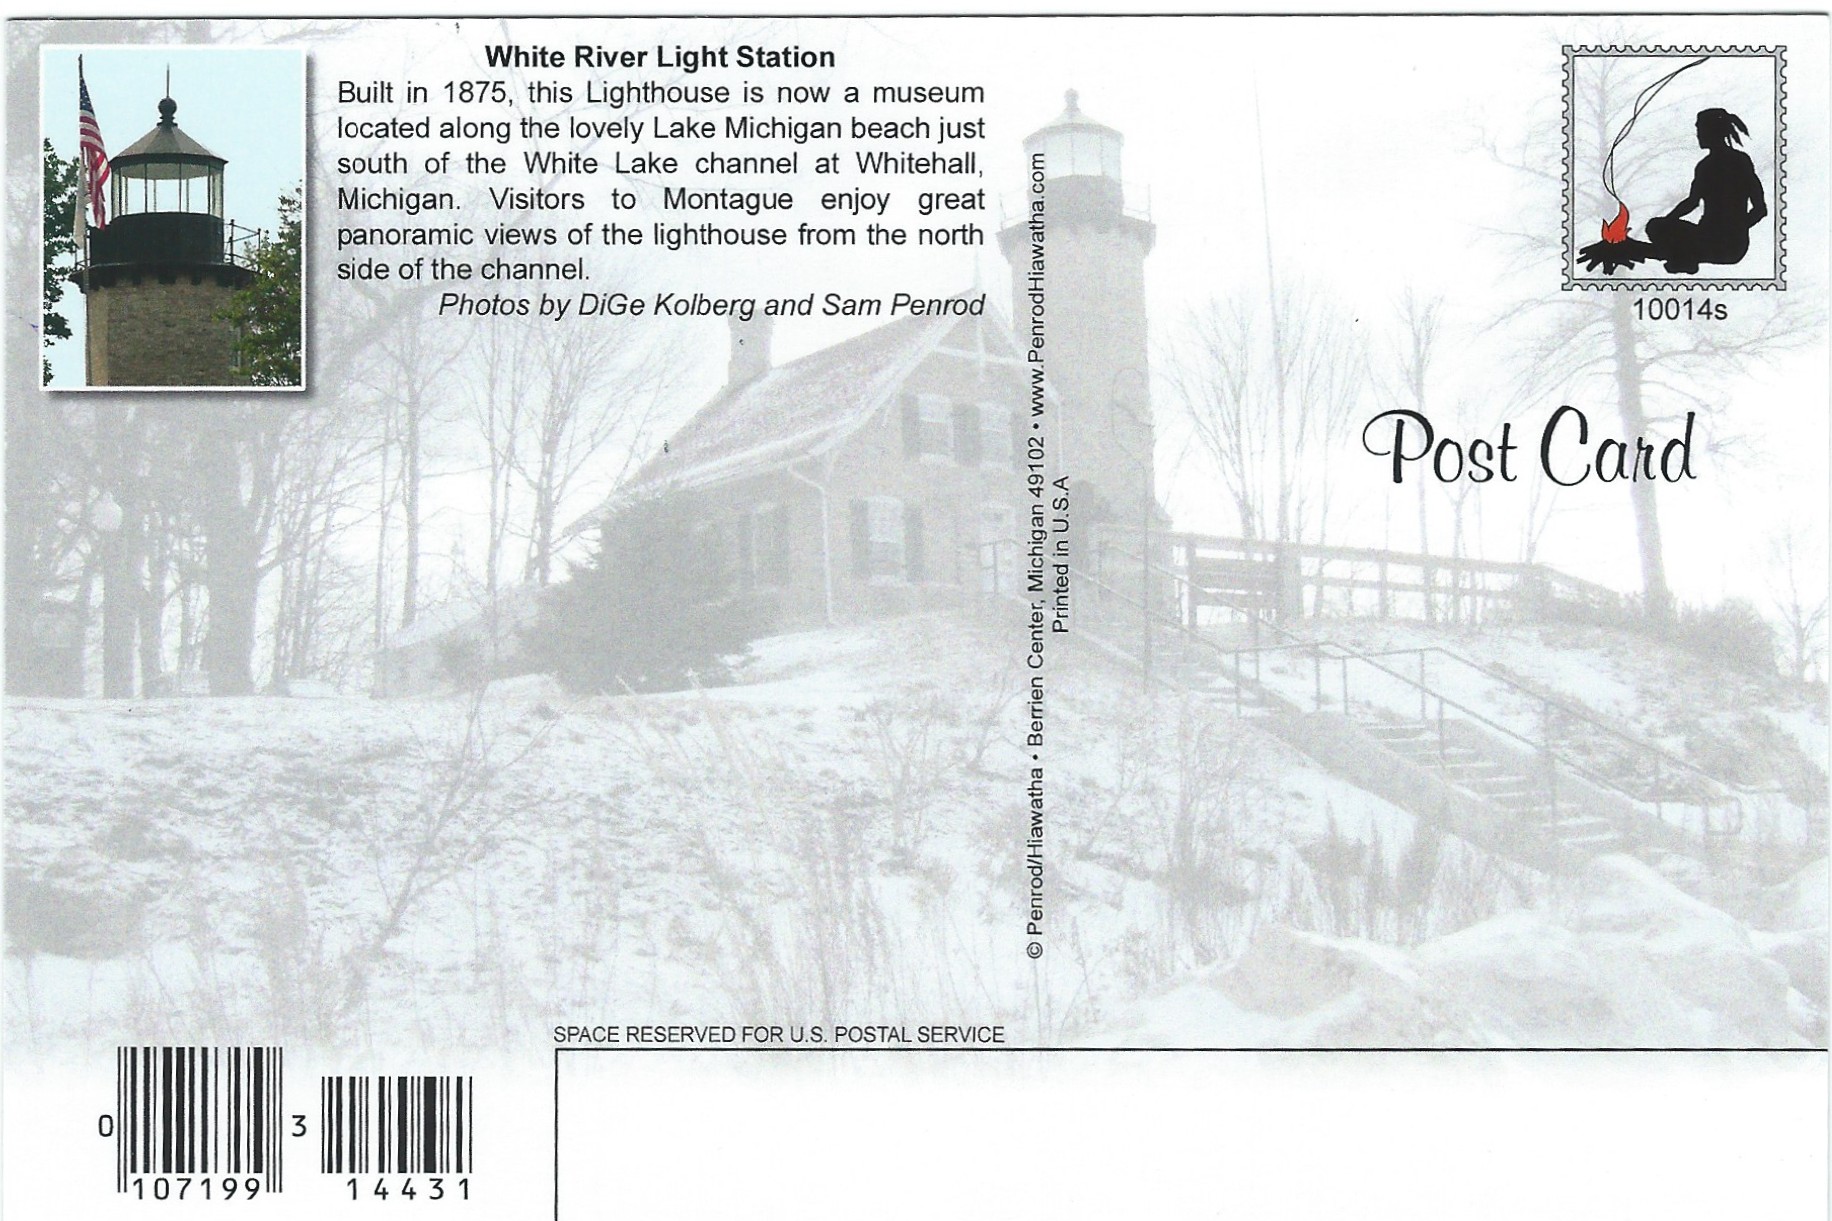 White River Light Station Lighthouse Postcard 10014s (MI)